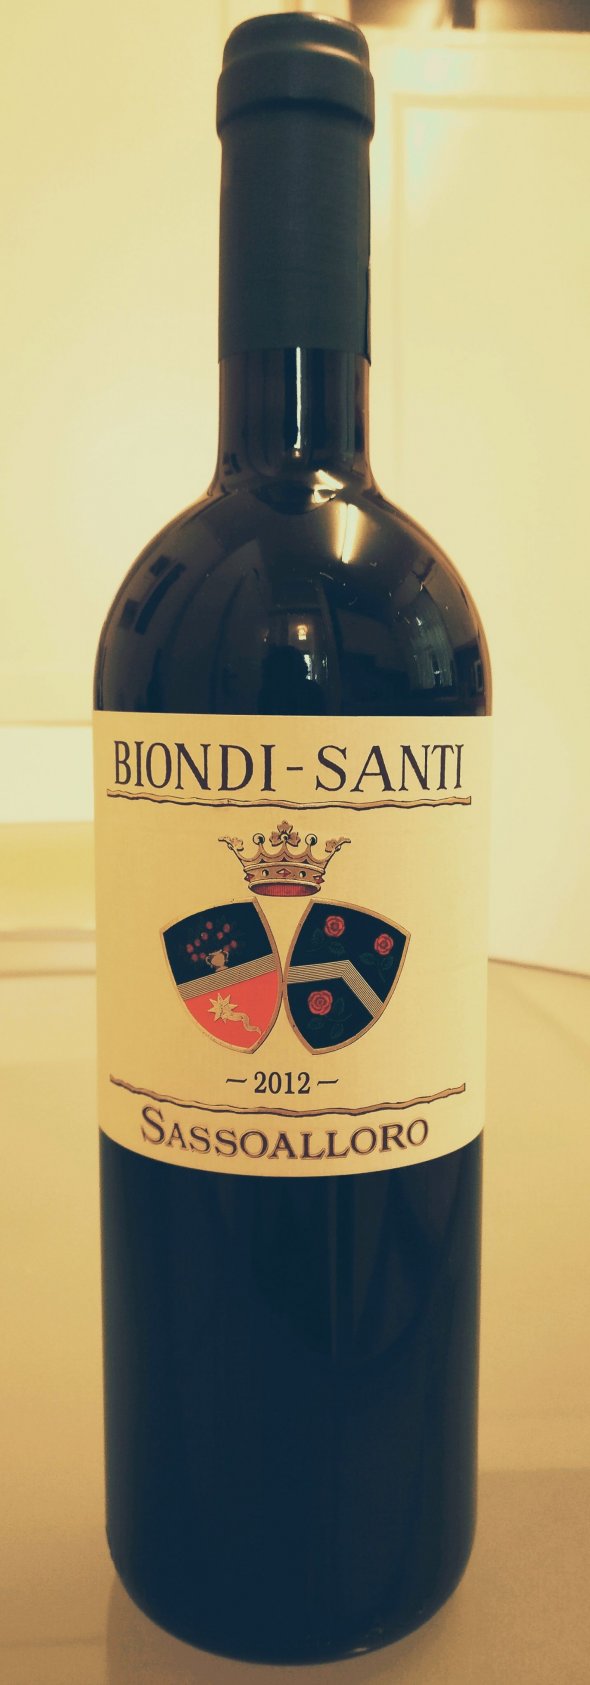 Biondi Santi (Jacopi) Sassoalloro, Tuscany, Italy, IGT